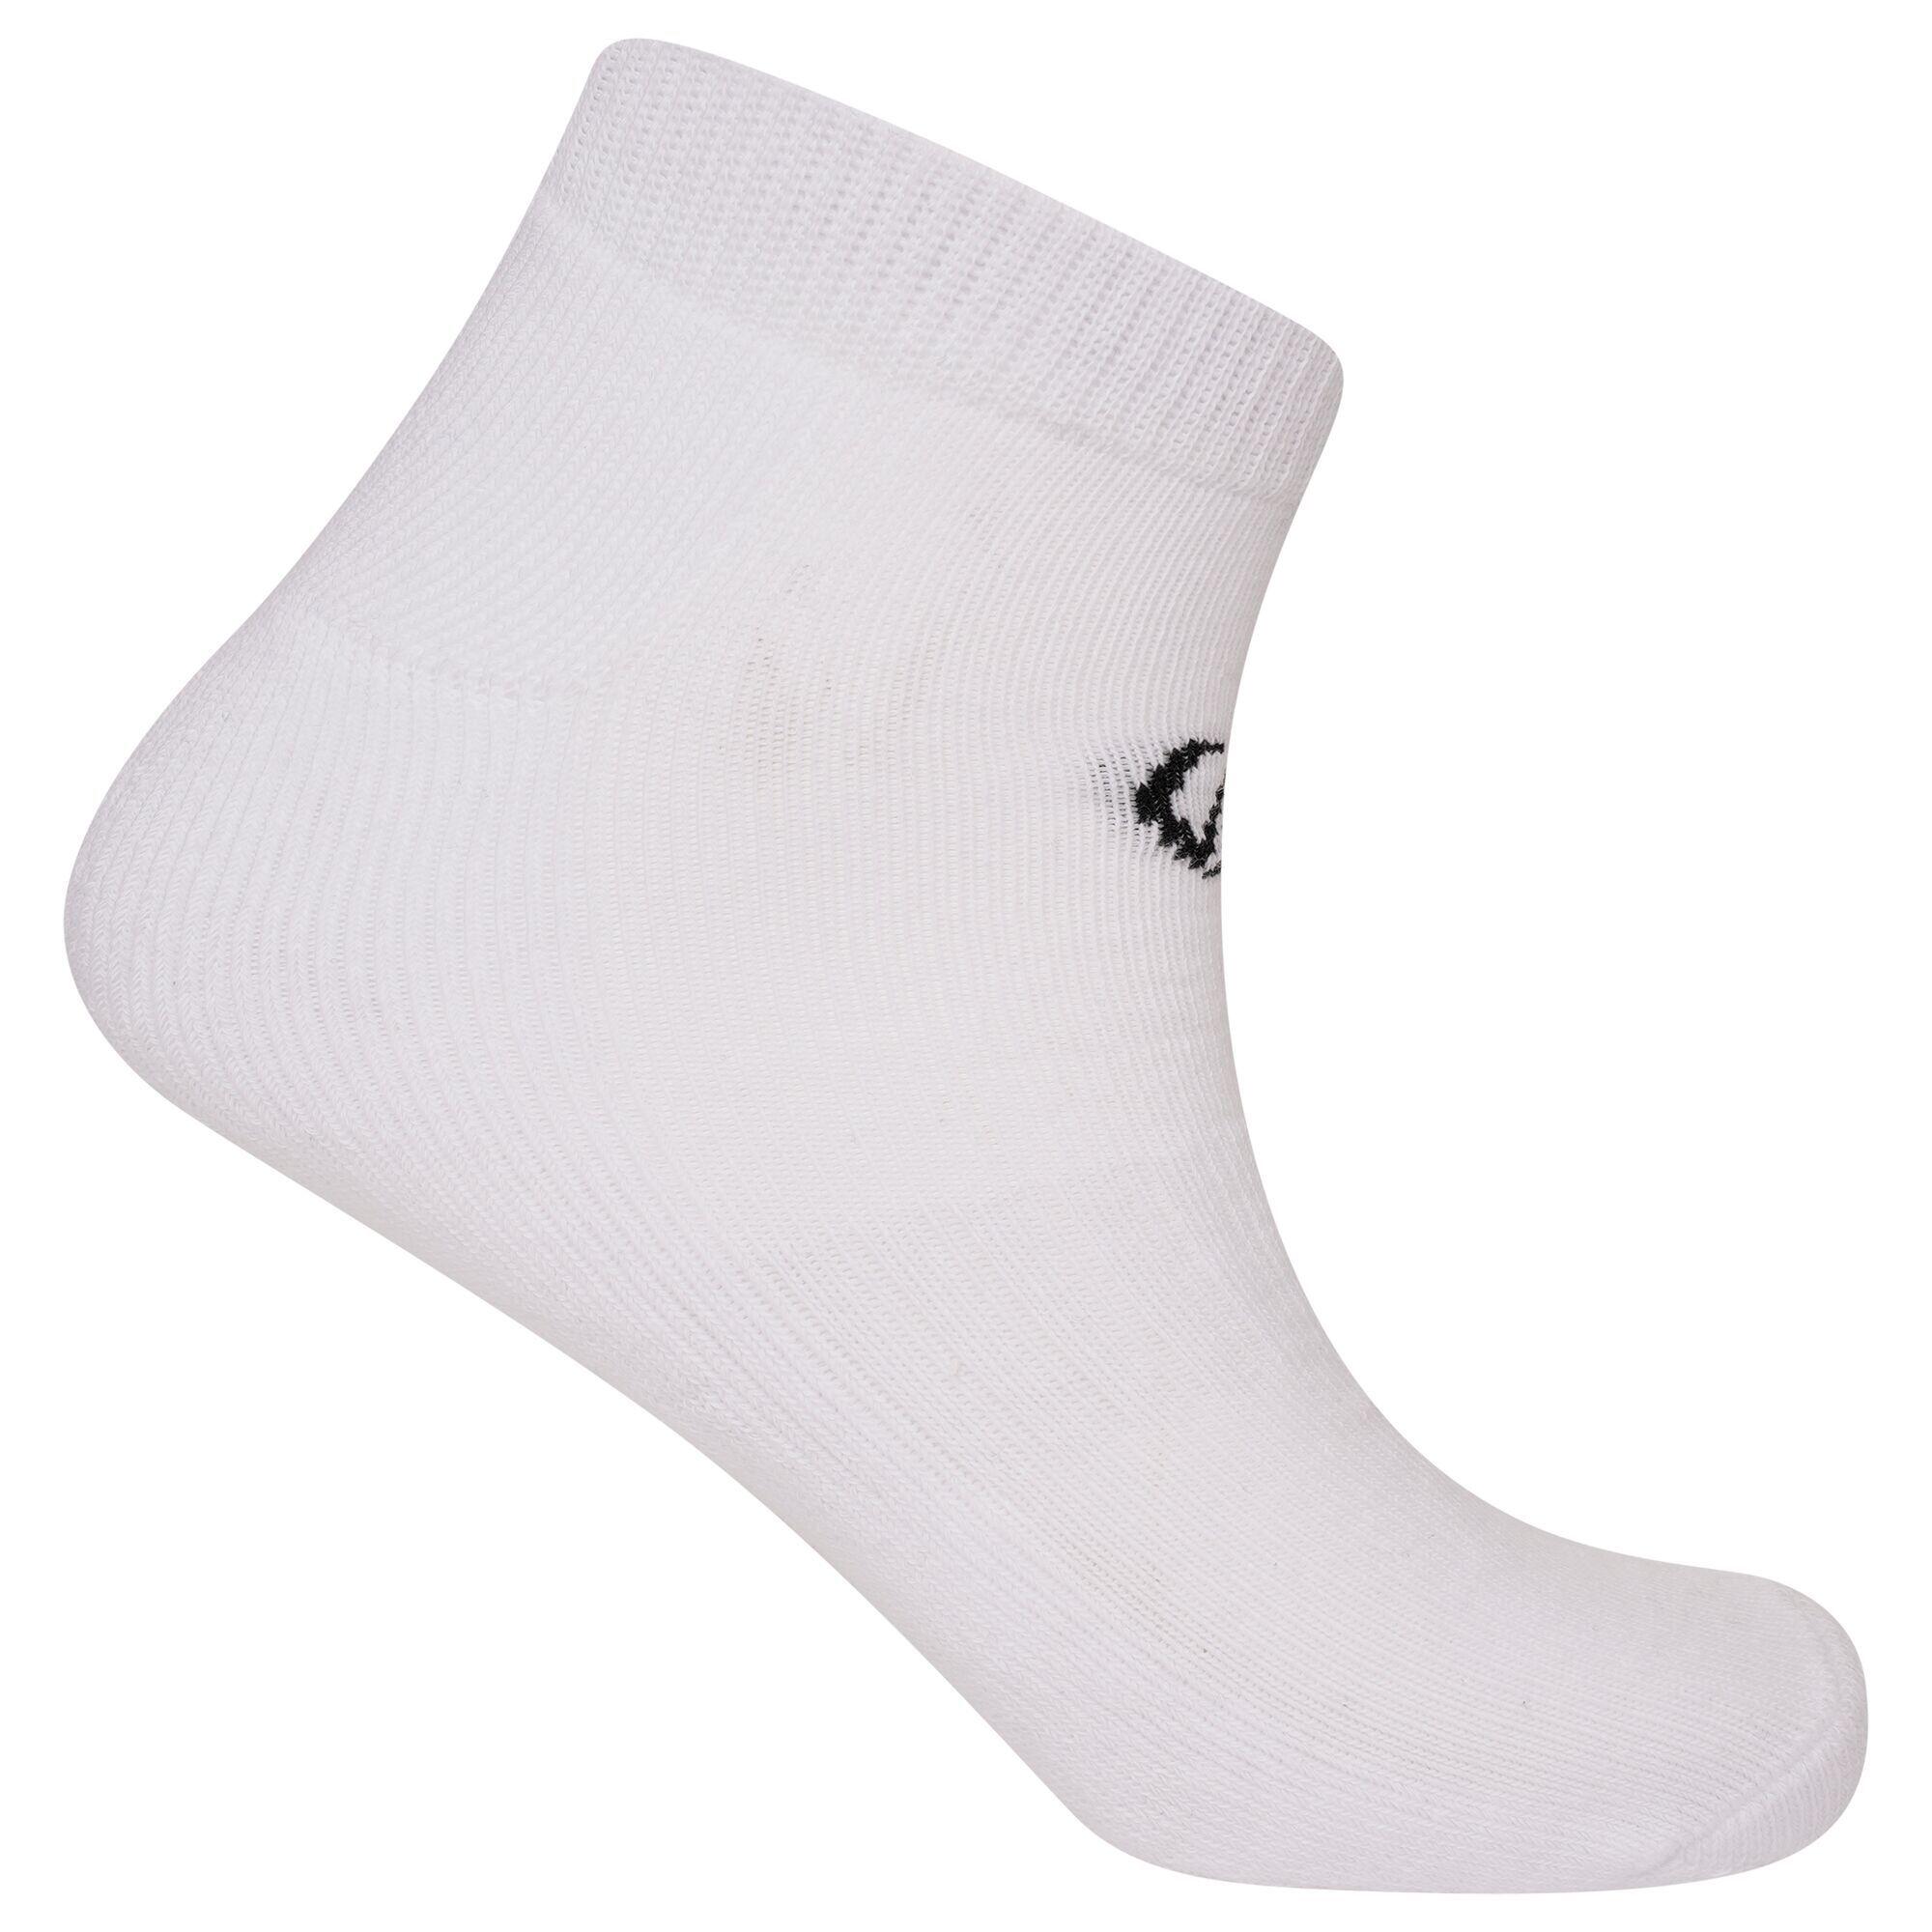 Unisex Adult Essentials Ankle Socks (Pack of 2) (White) 2/4